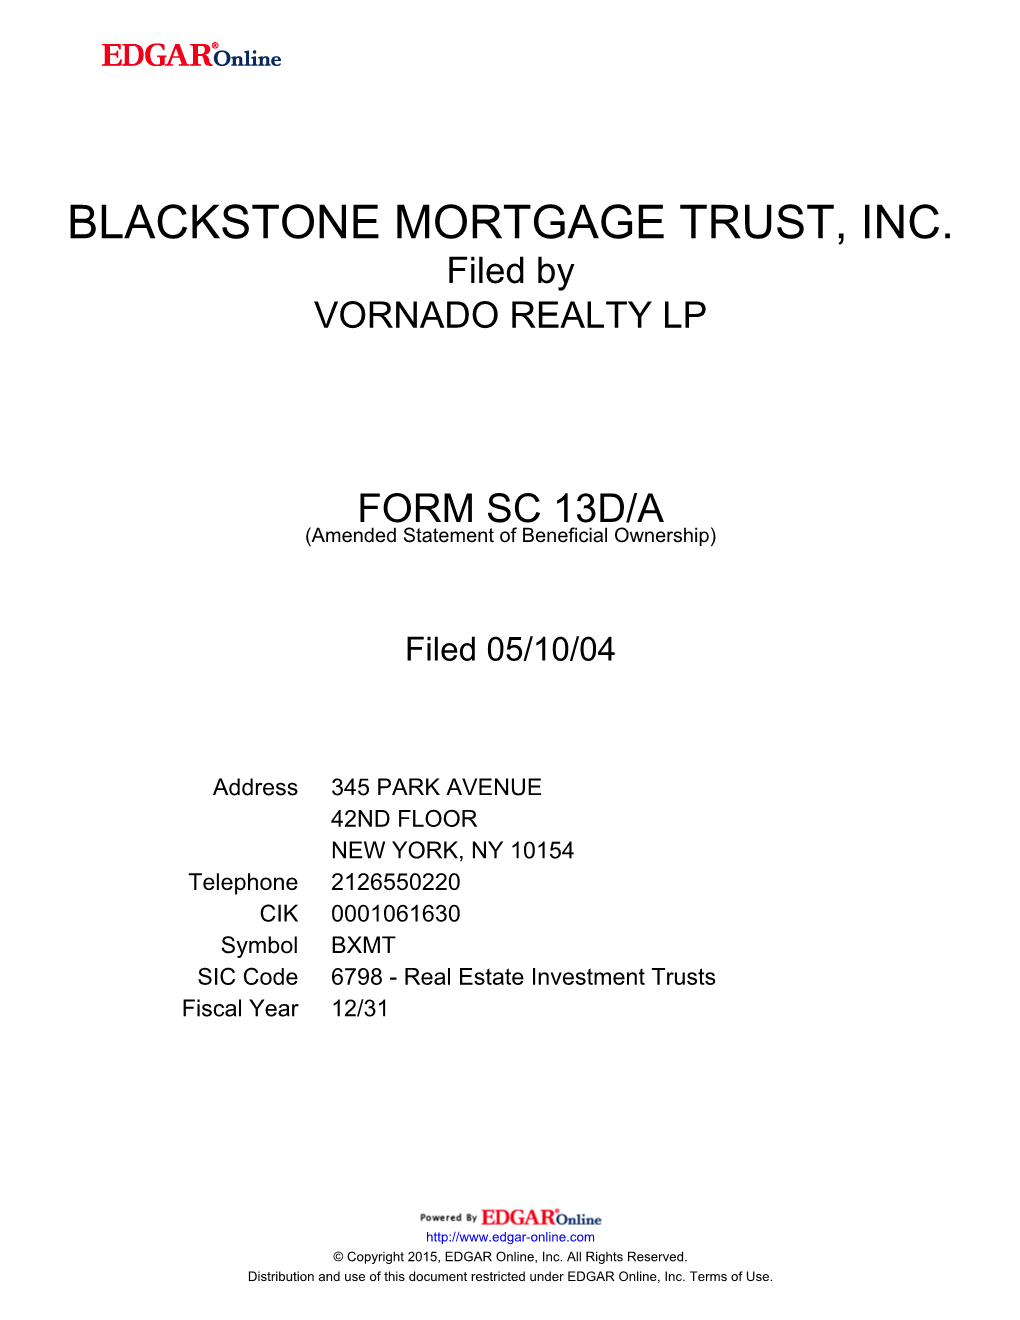 BLACKSTONE MORTGAGE TRUST, INC. Filed by VORNADO REALTY LP